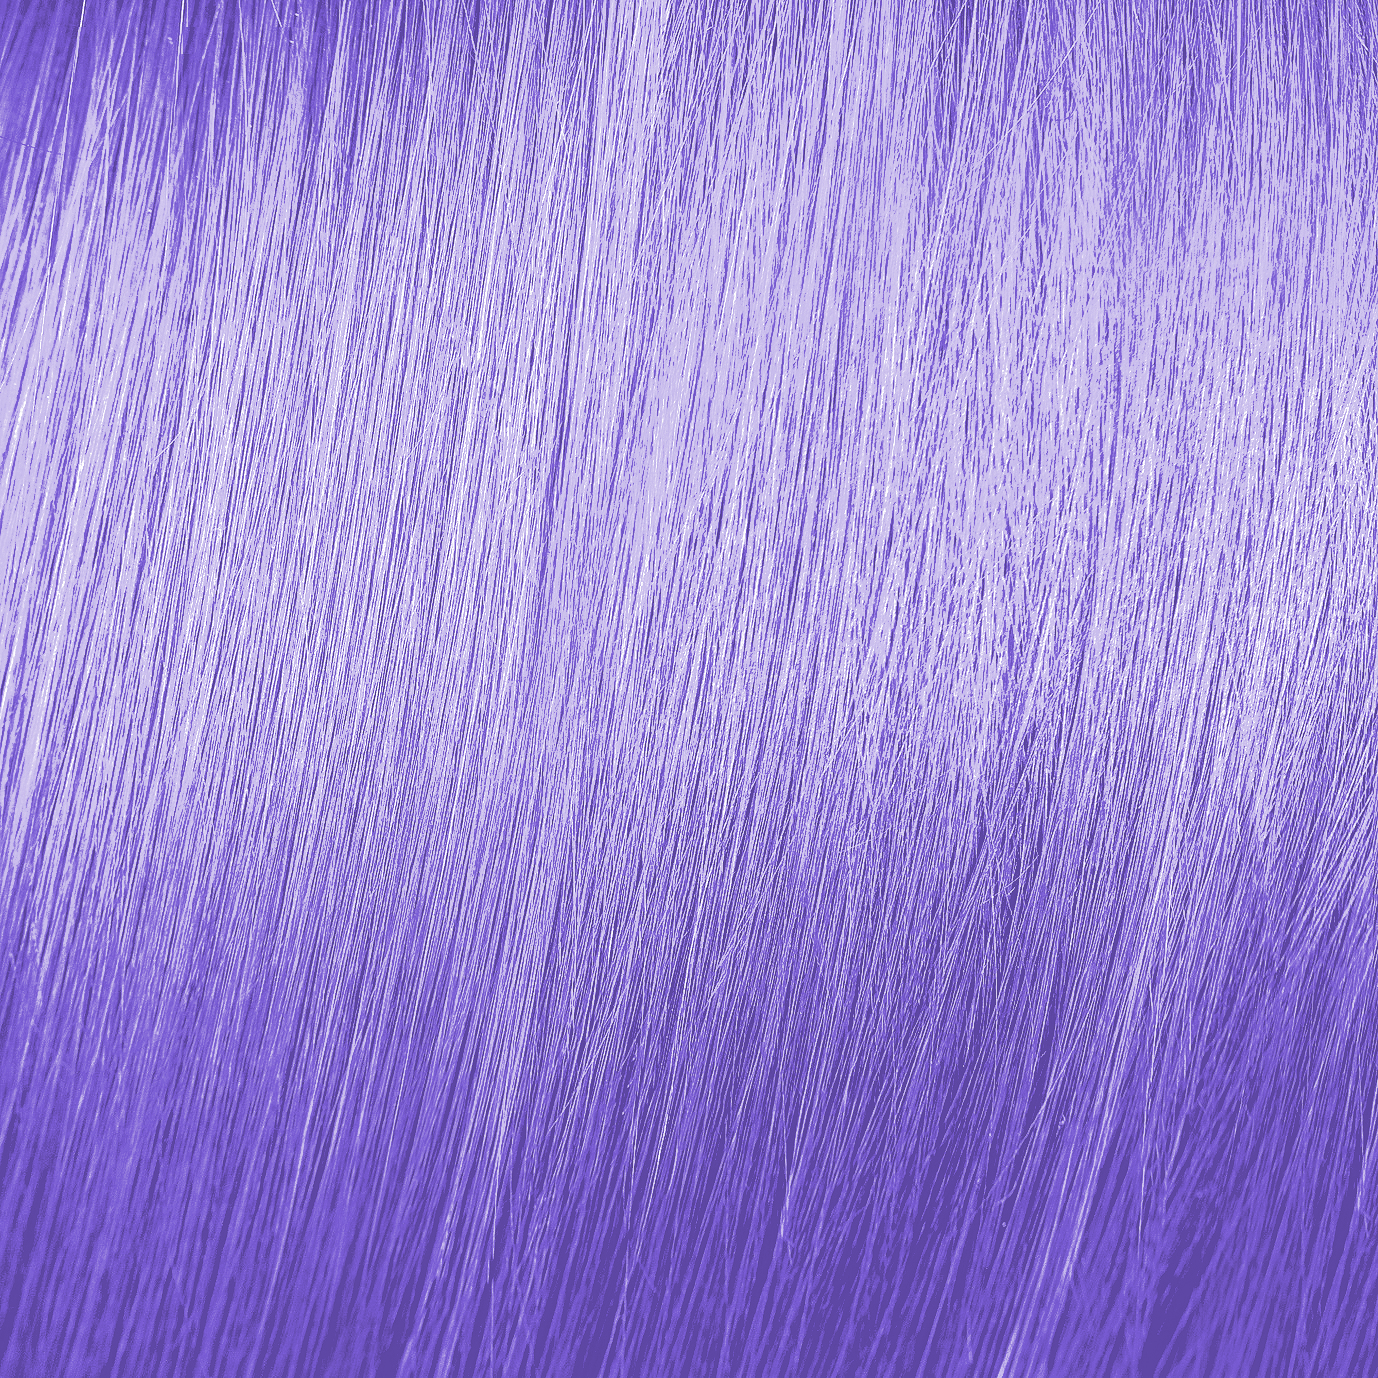 ELGON MODA STYLING Крем-краска 10/107 Viola ametista- фиолетовый аметист, 125мл